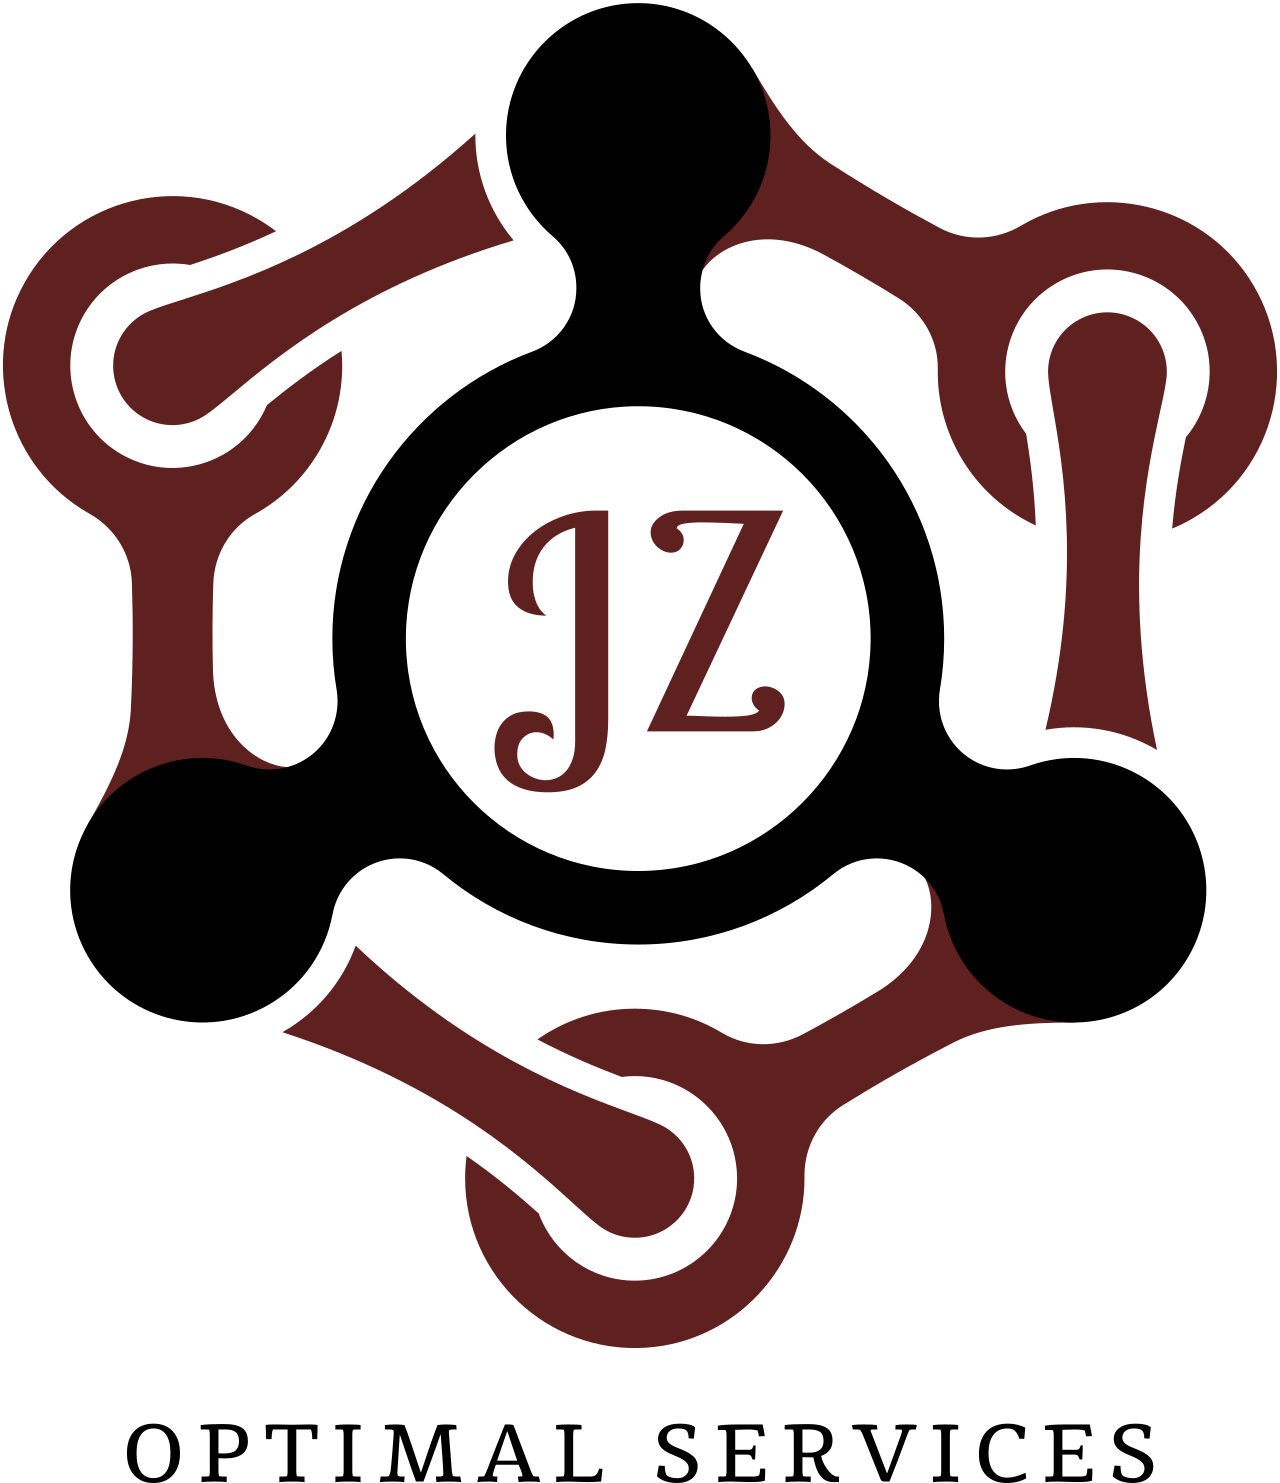 JZ's logo